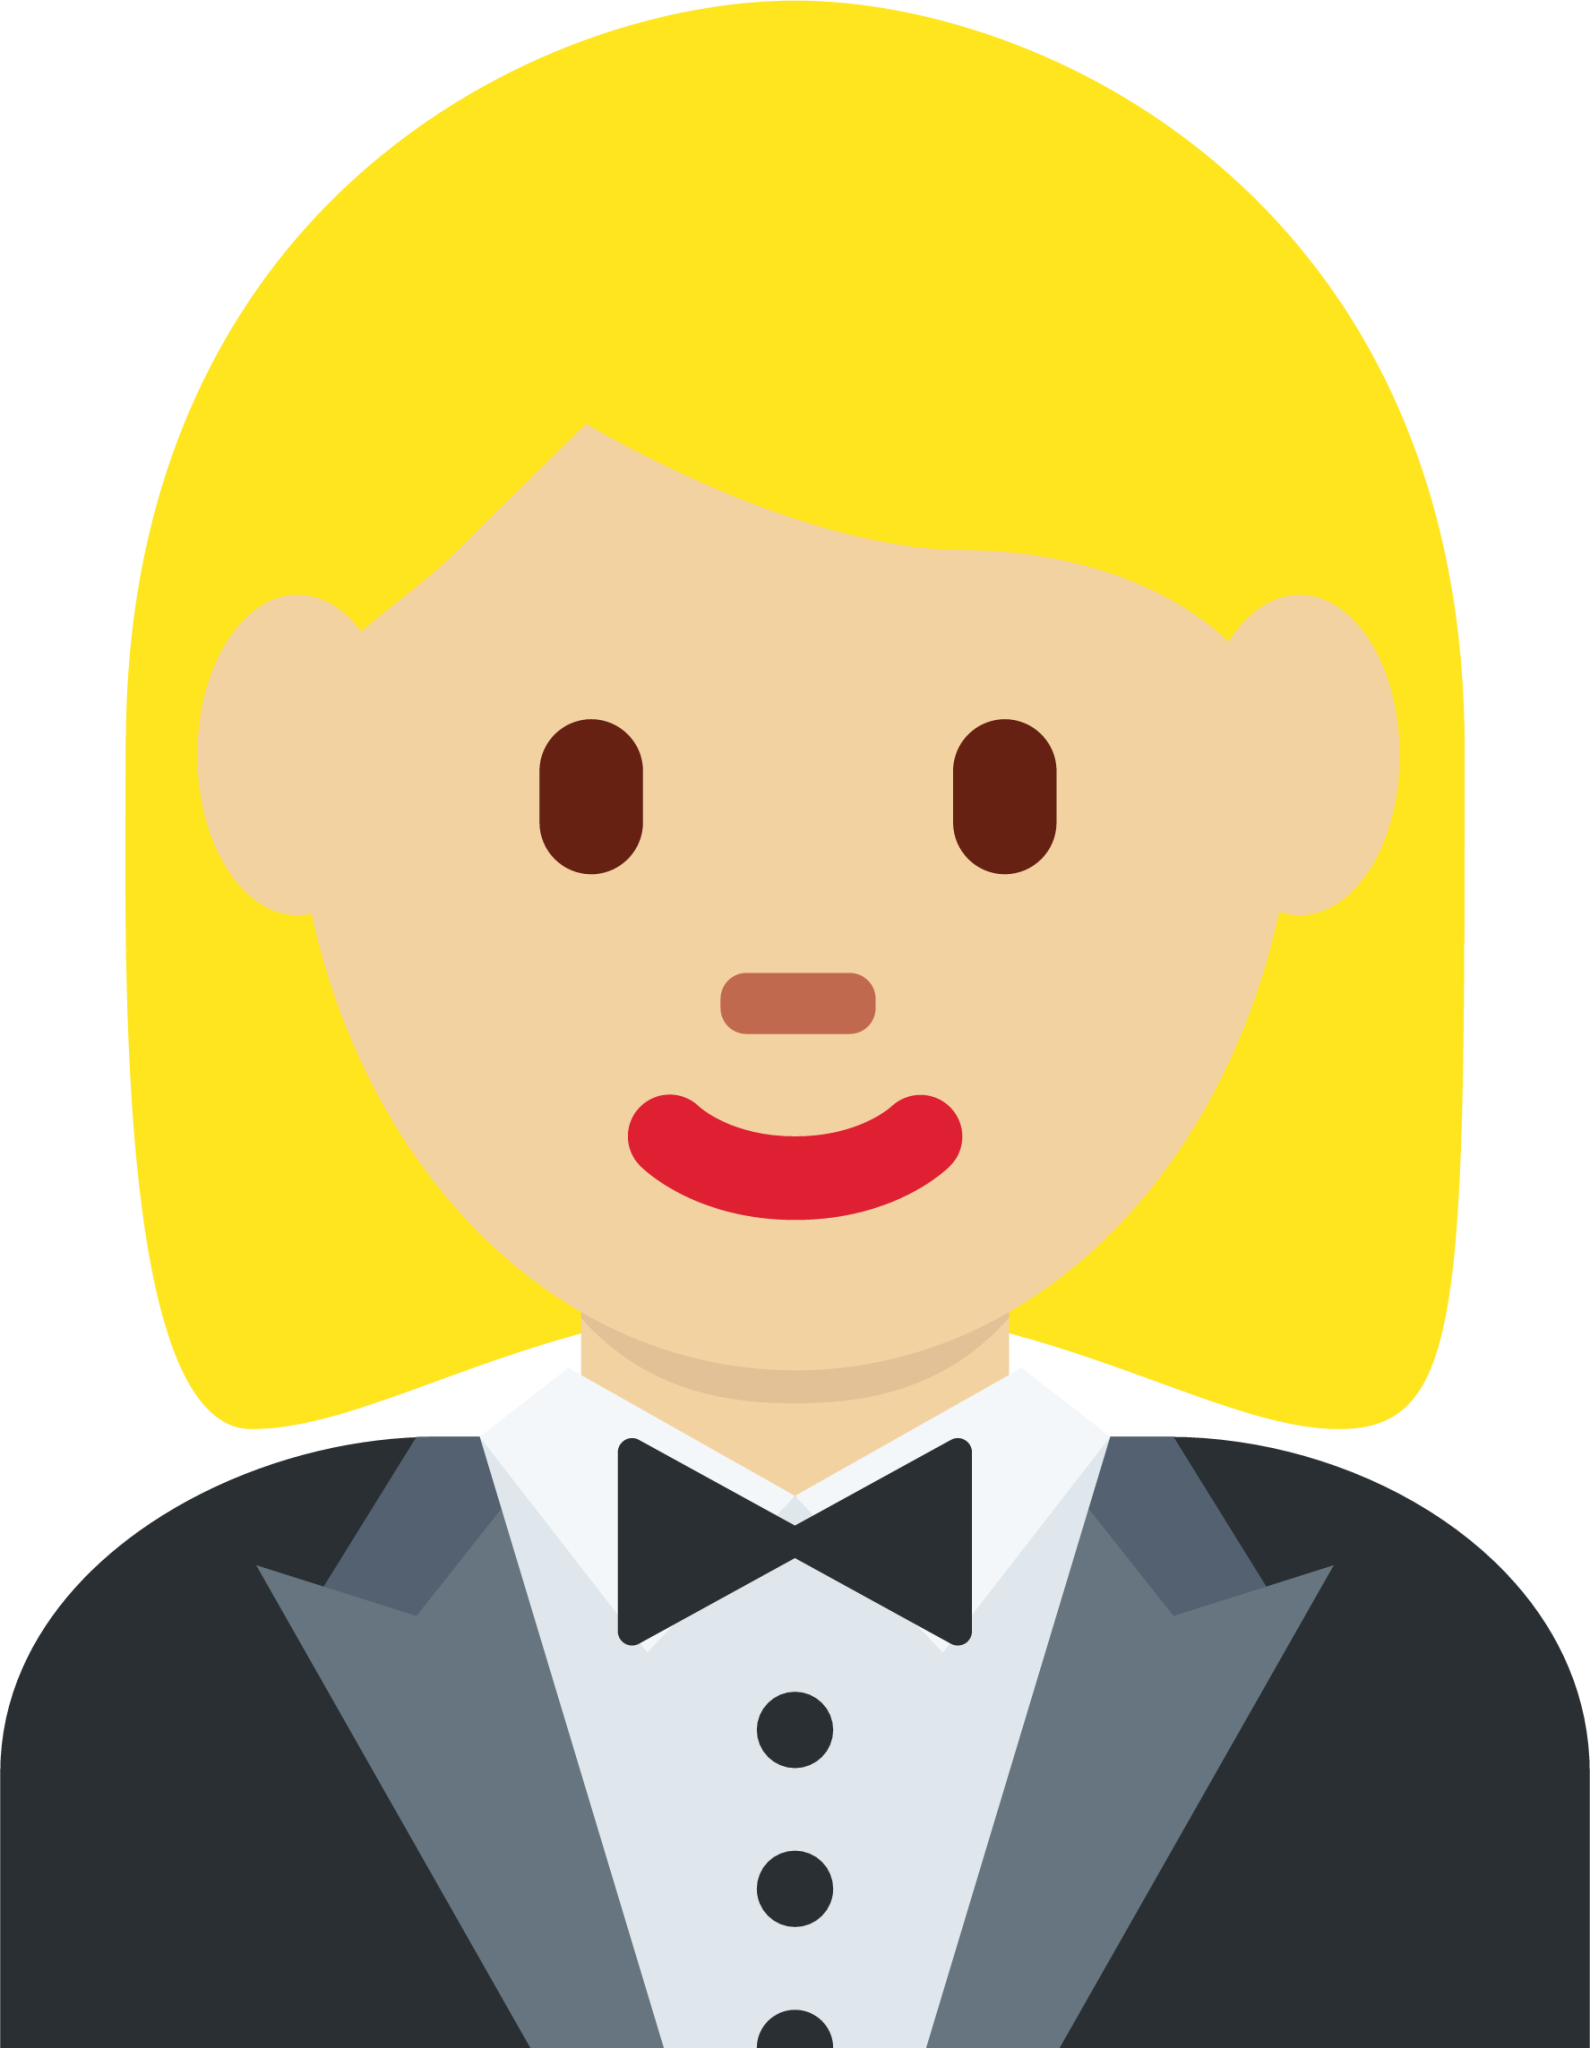 woman in tuxedo: medium-light skin tone emoji